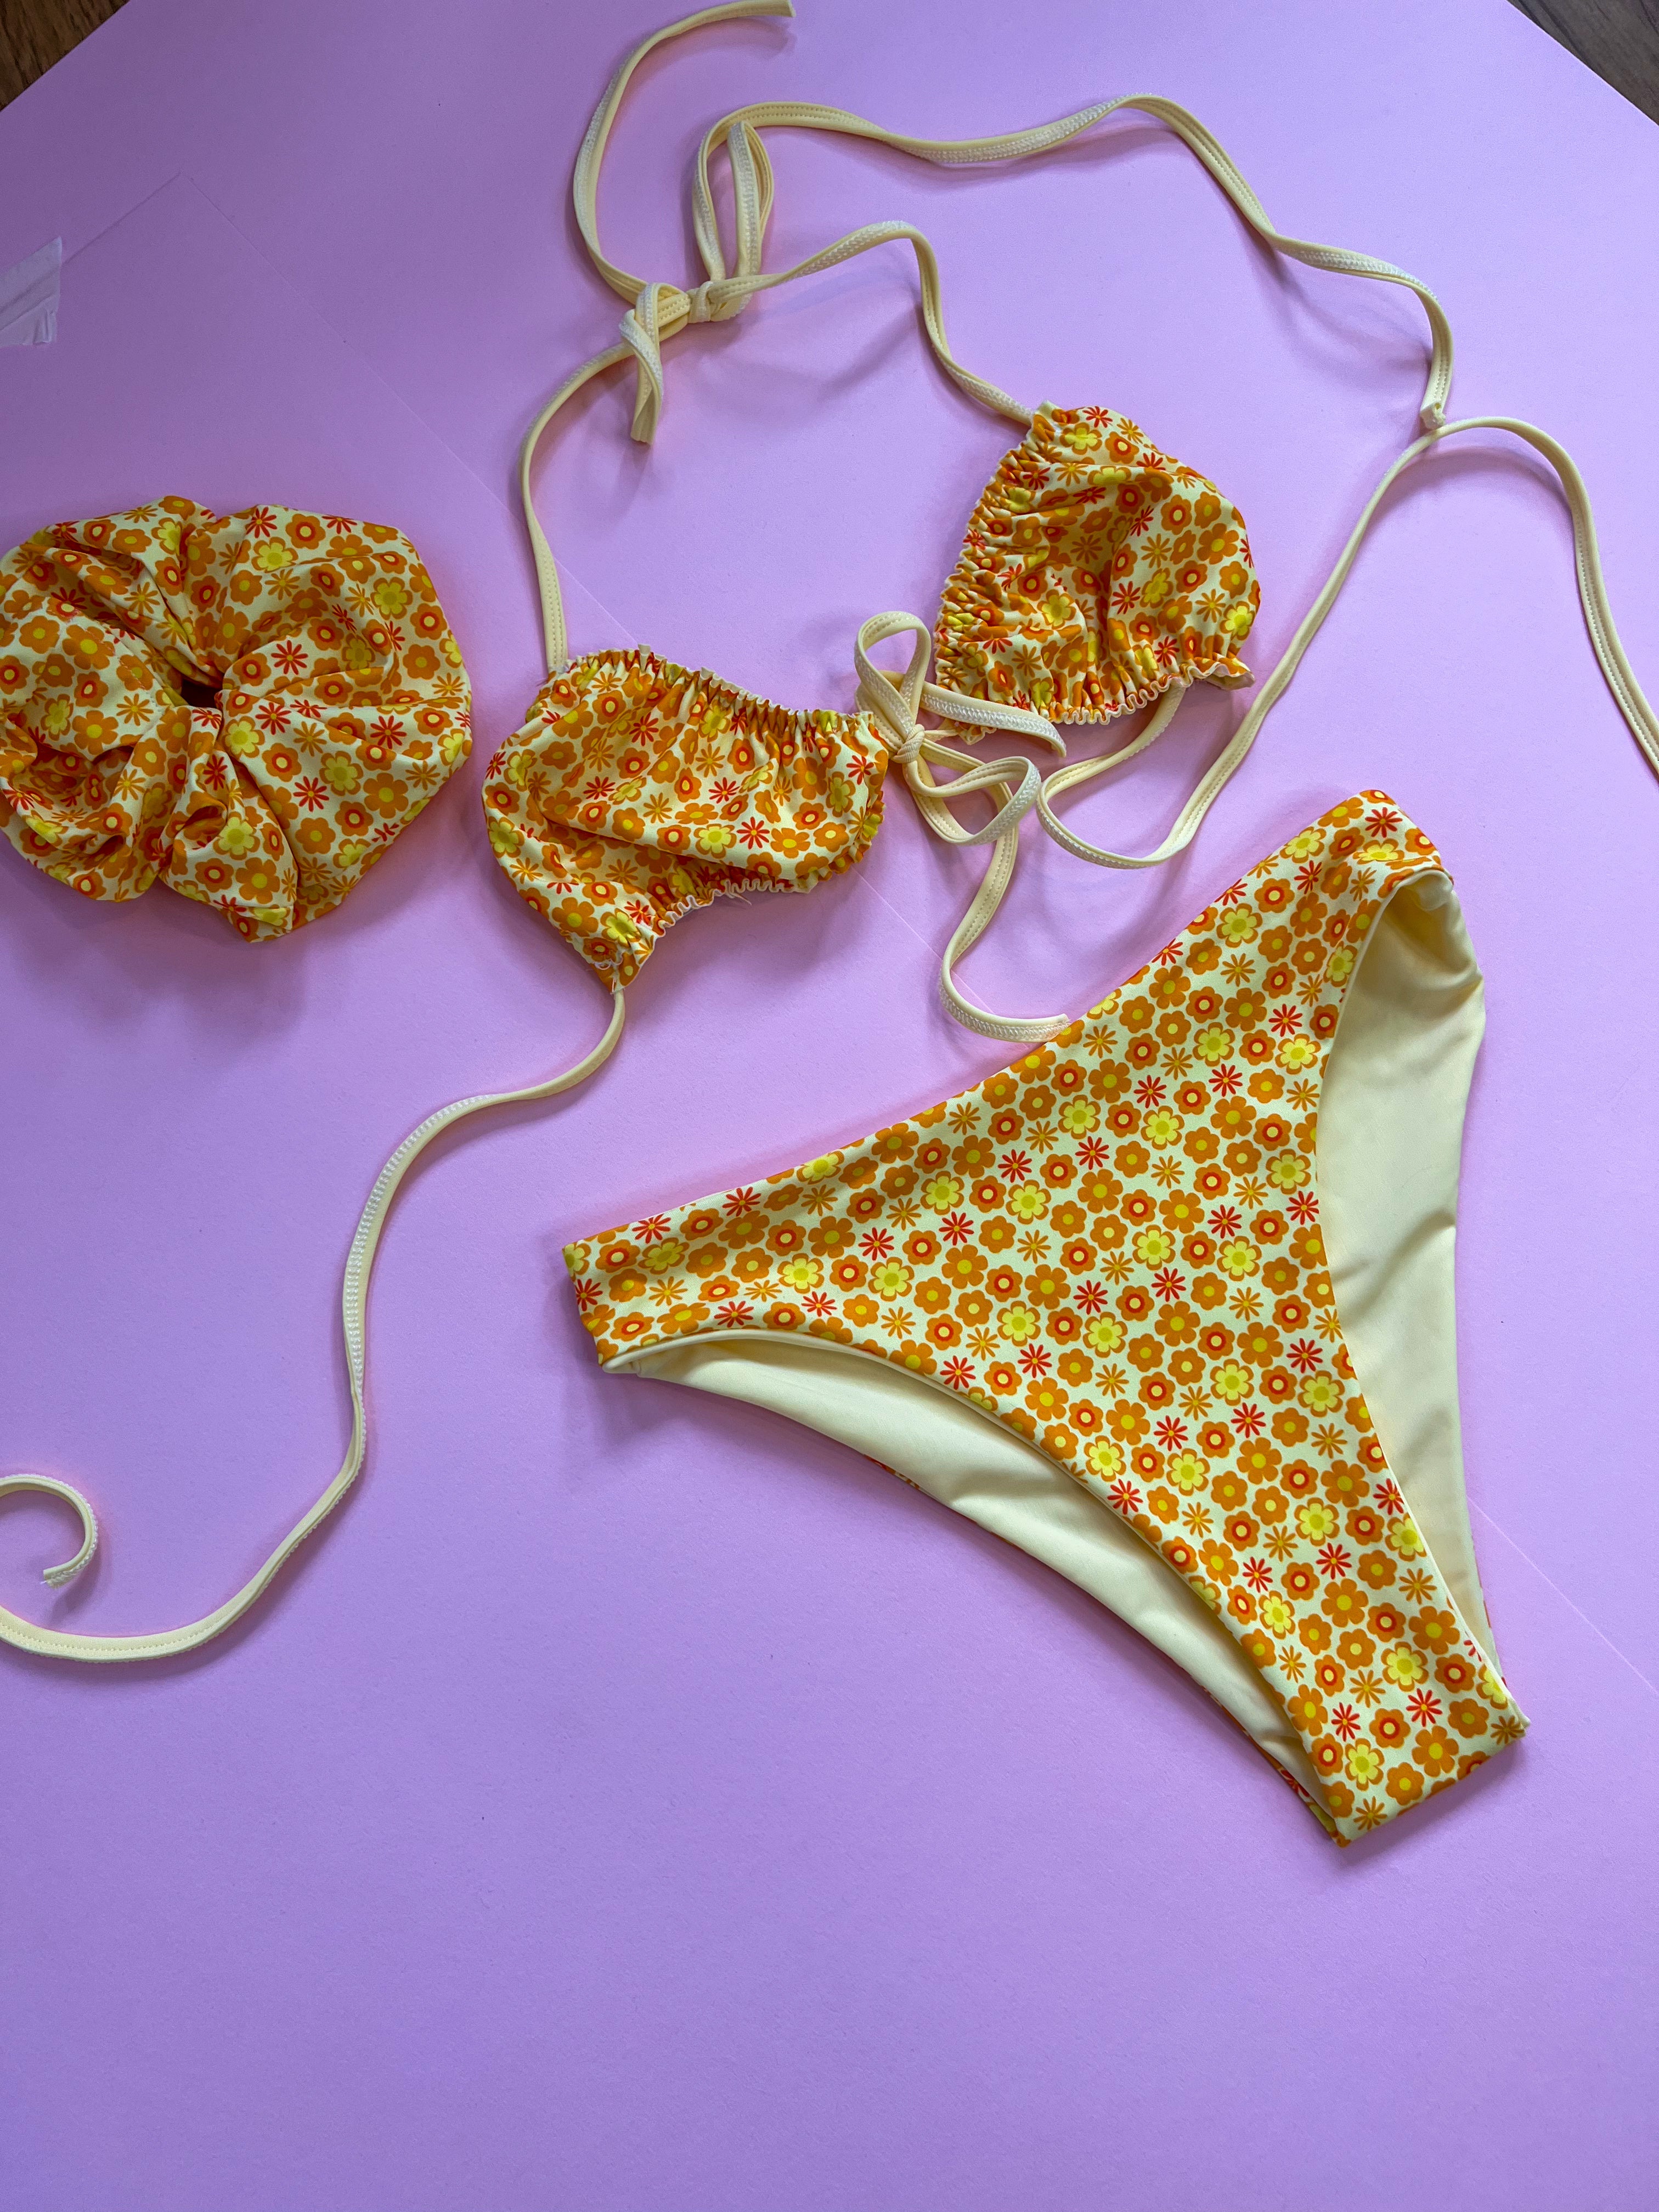 Bralette bikini and midrise set in Lemontini